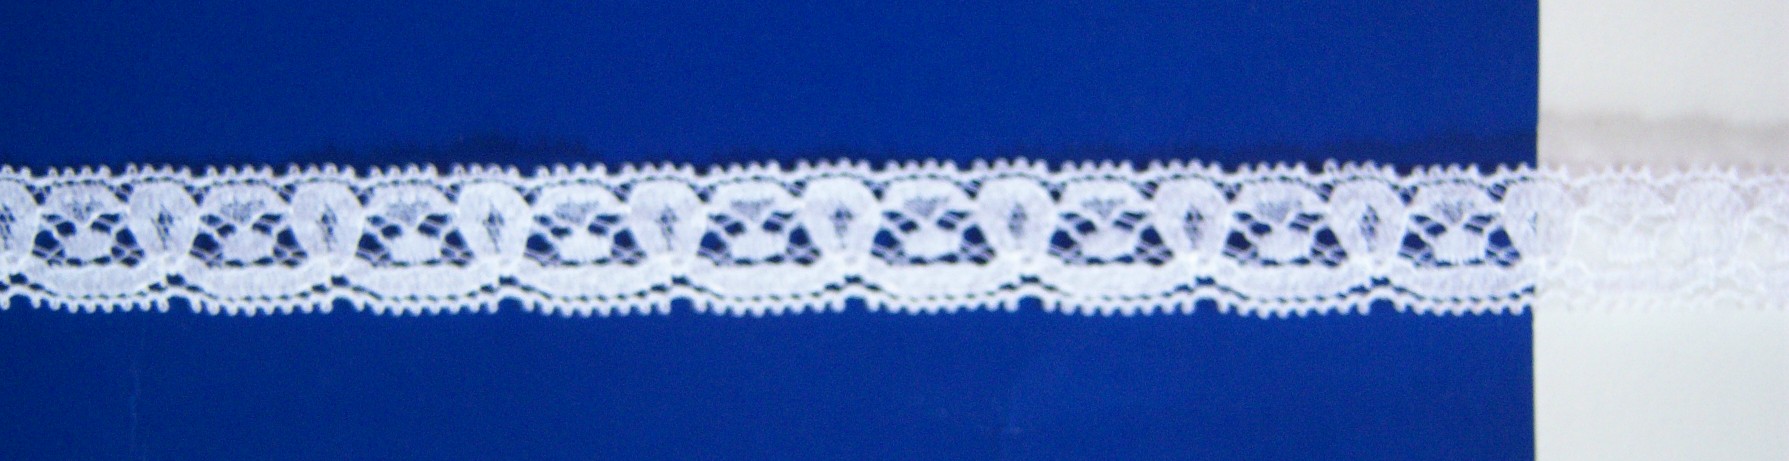 Silk White 9/16" Nylon Lace